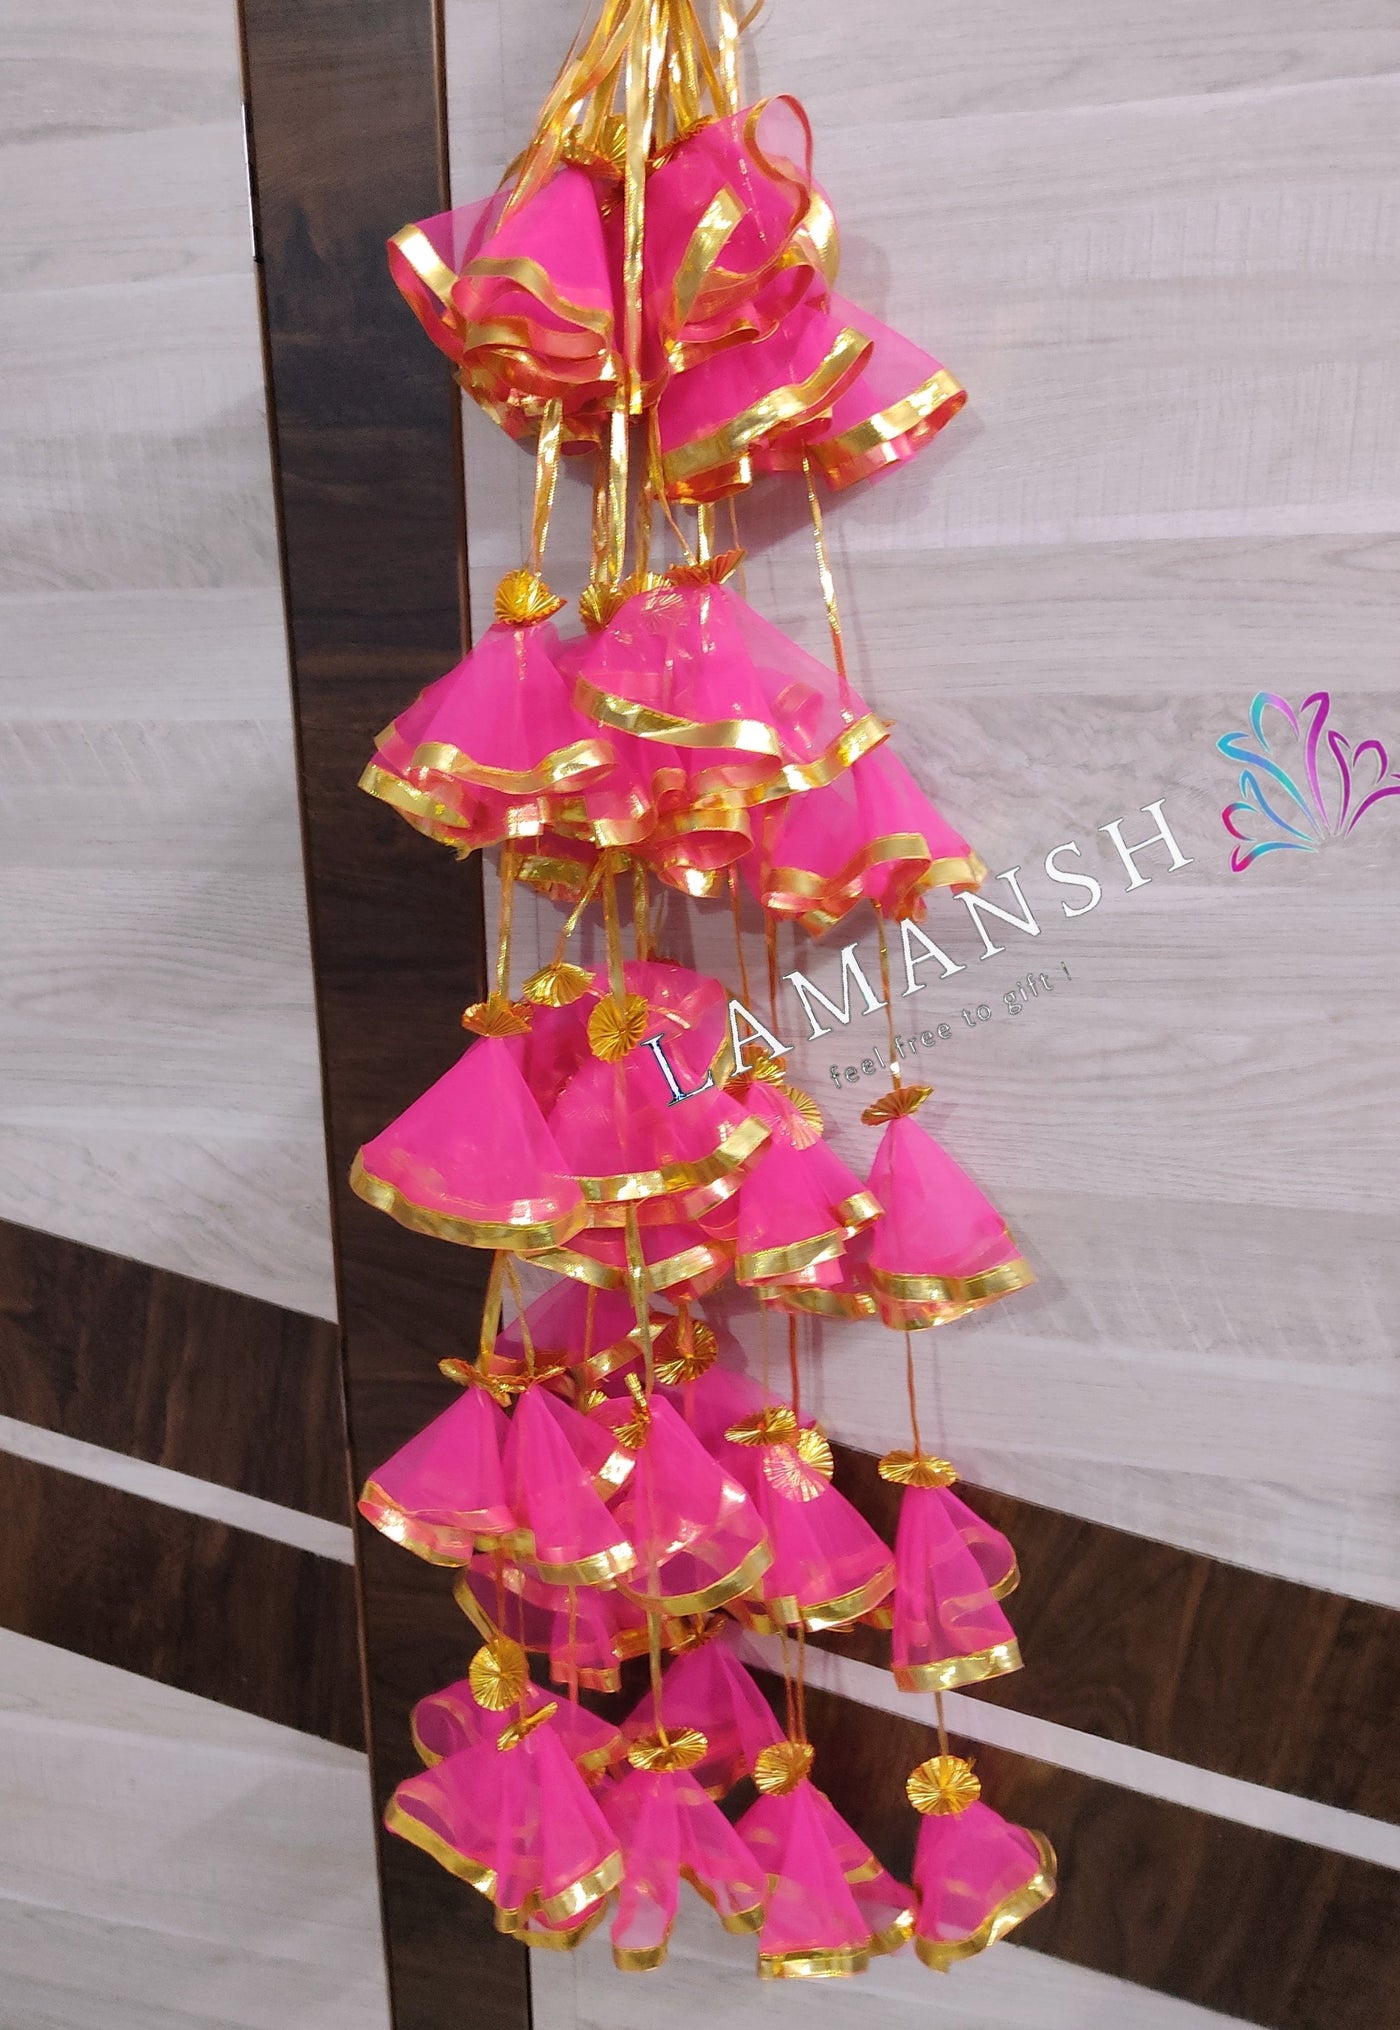 Lamansh net hangings Net Fabric & Gota / Hot pink LAMANSH® ( Pack of 10 ) 4 ft Net Hangings for Wedding Backdrops / Fabric Gota hangings for Haldi & Indian Wedding Event Decoration